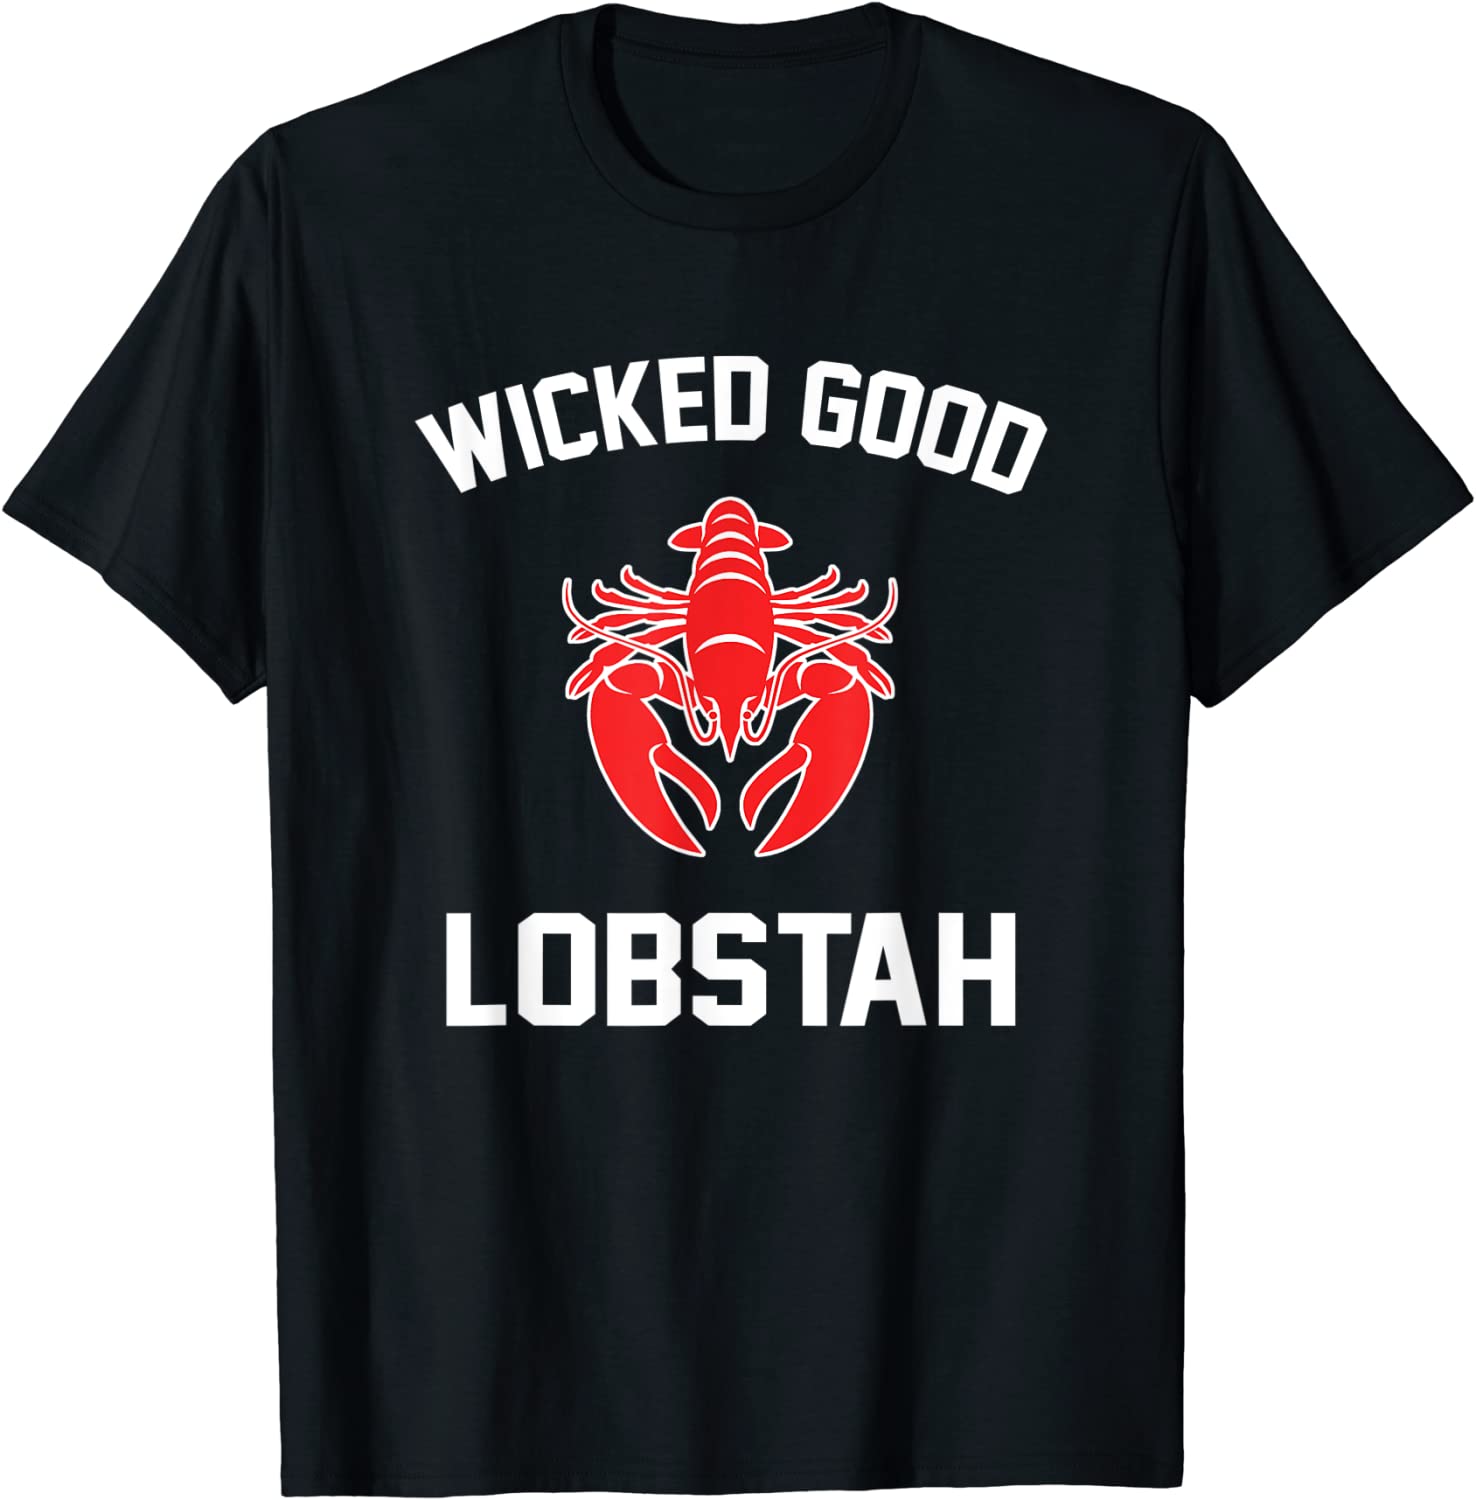 wicked good lobstah t-shirt